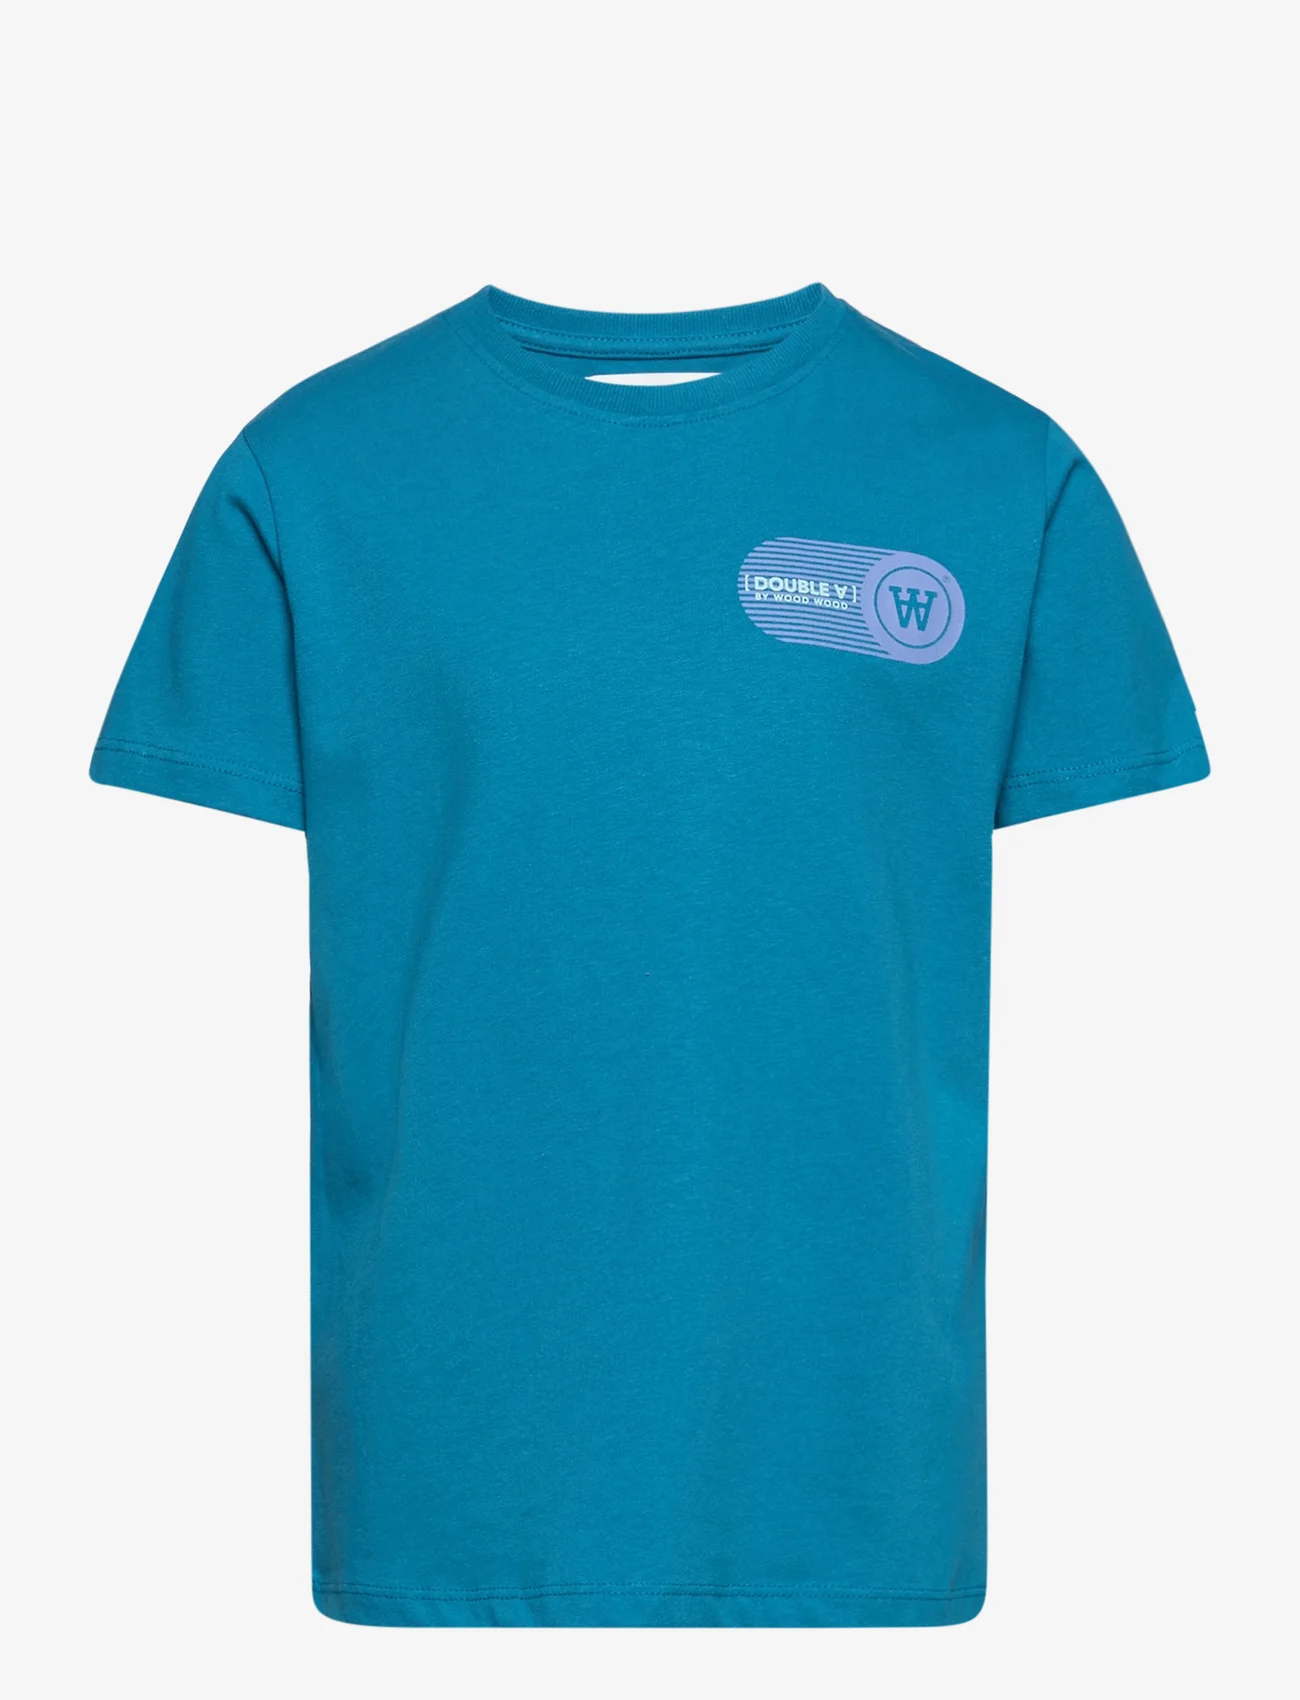 Wood Wood - Ola kids print T-shirt - kortærmede - blue - 0